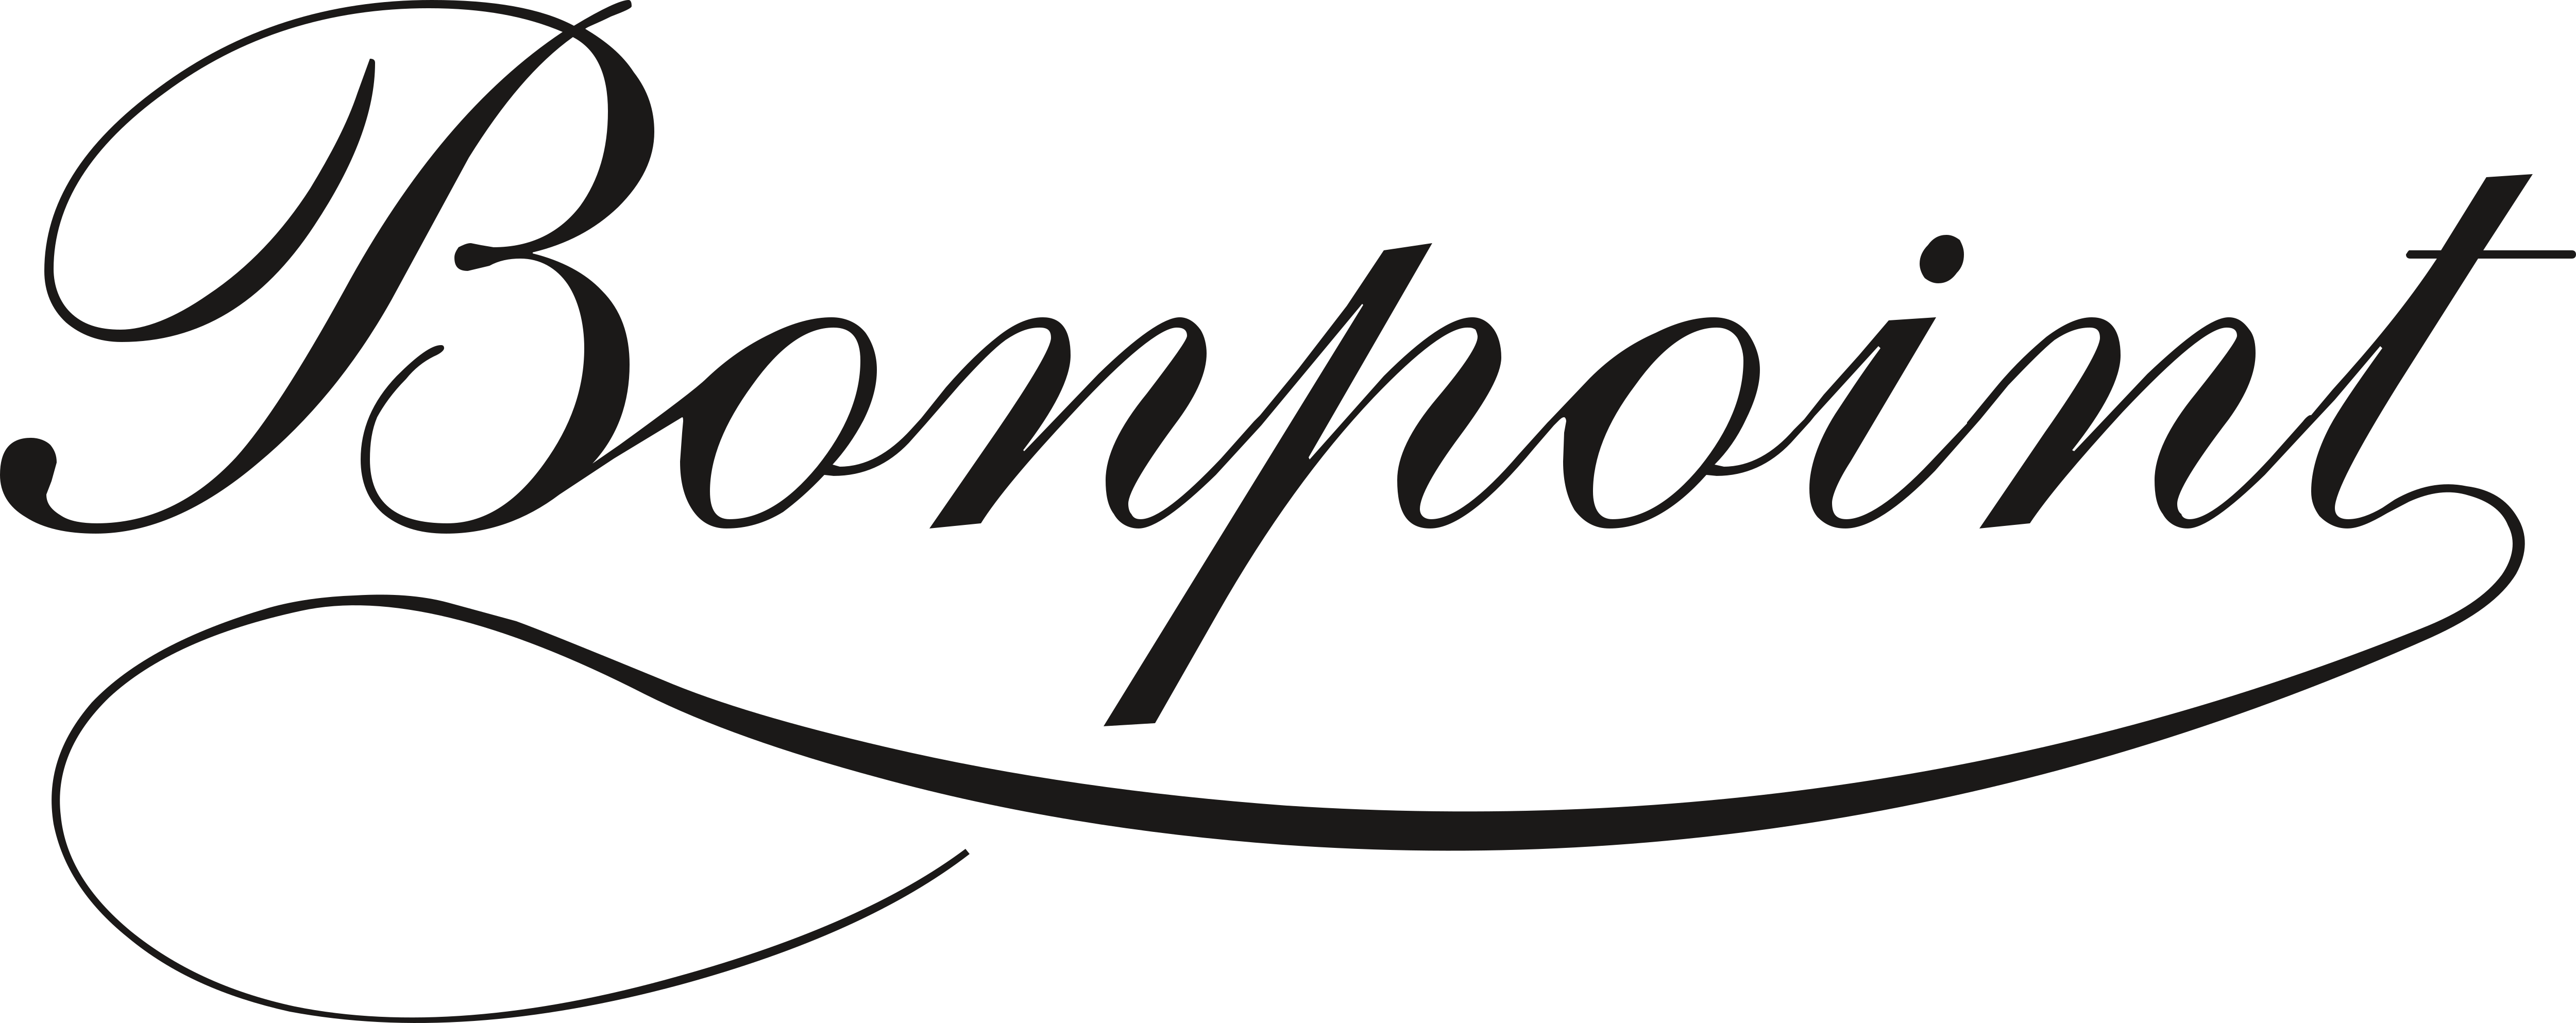 Bonpoint – Logos Download